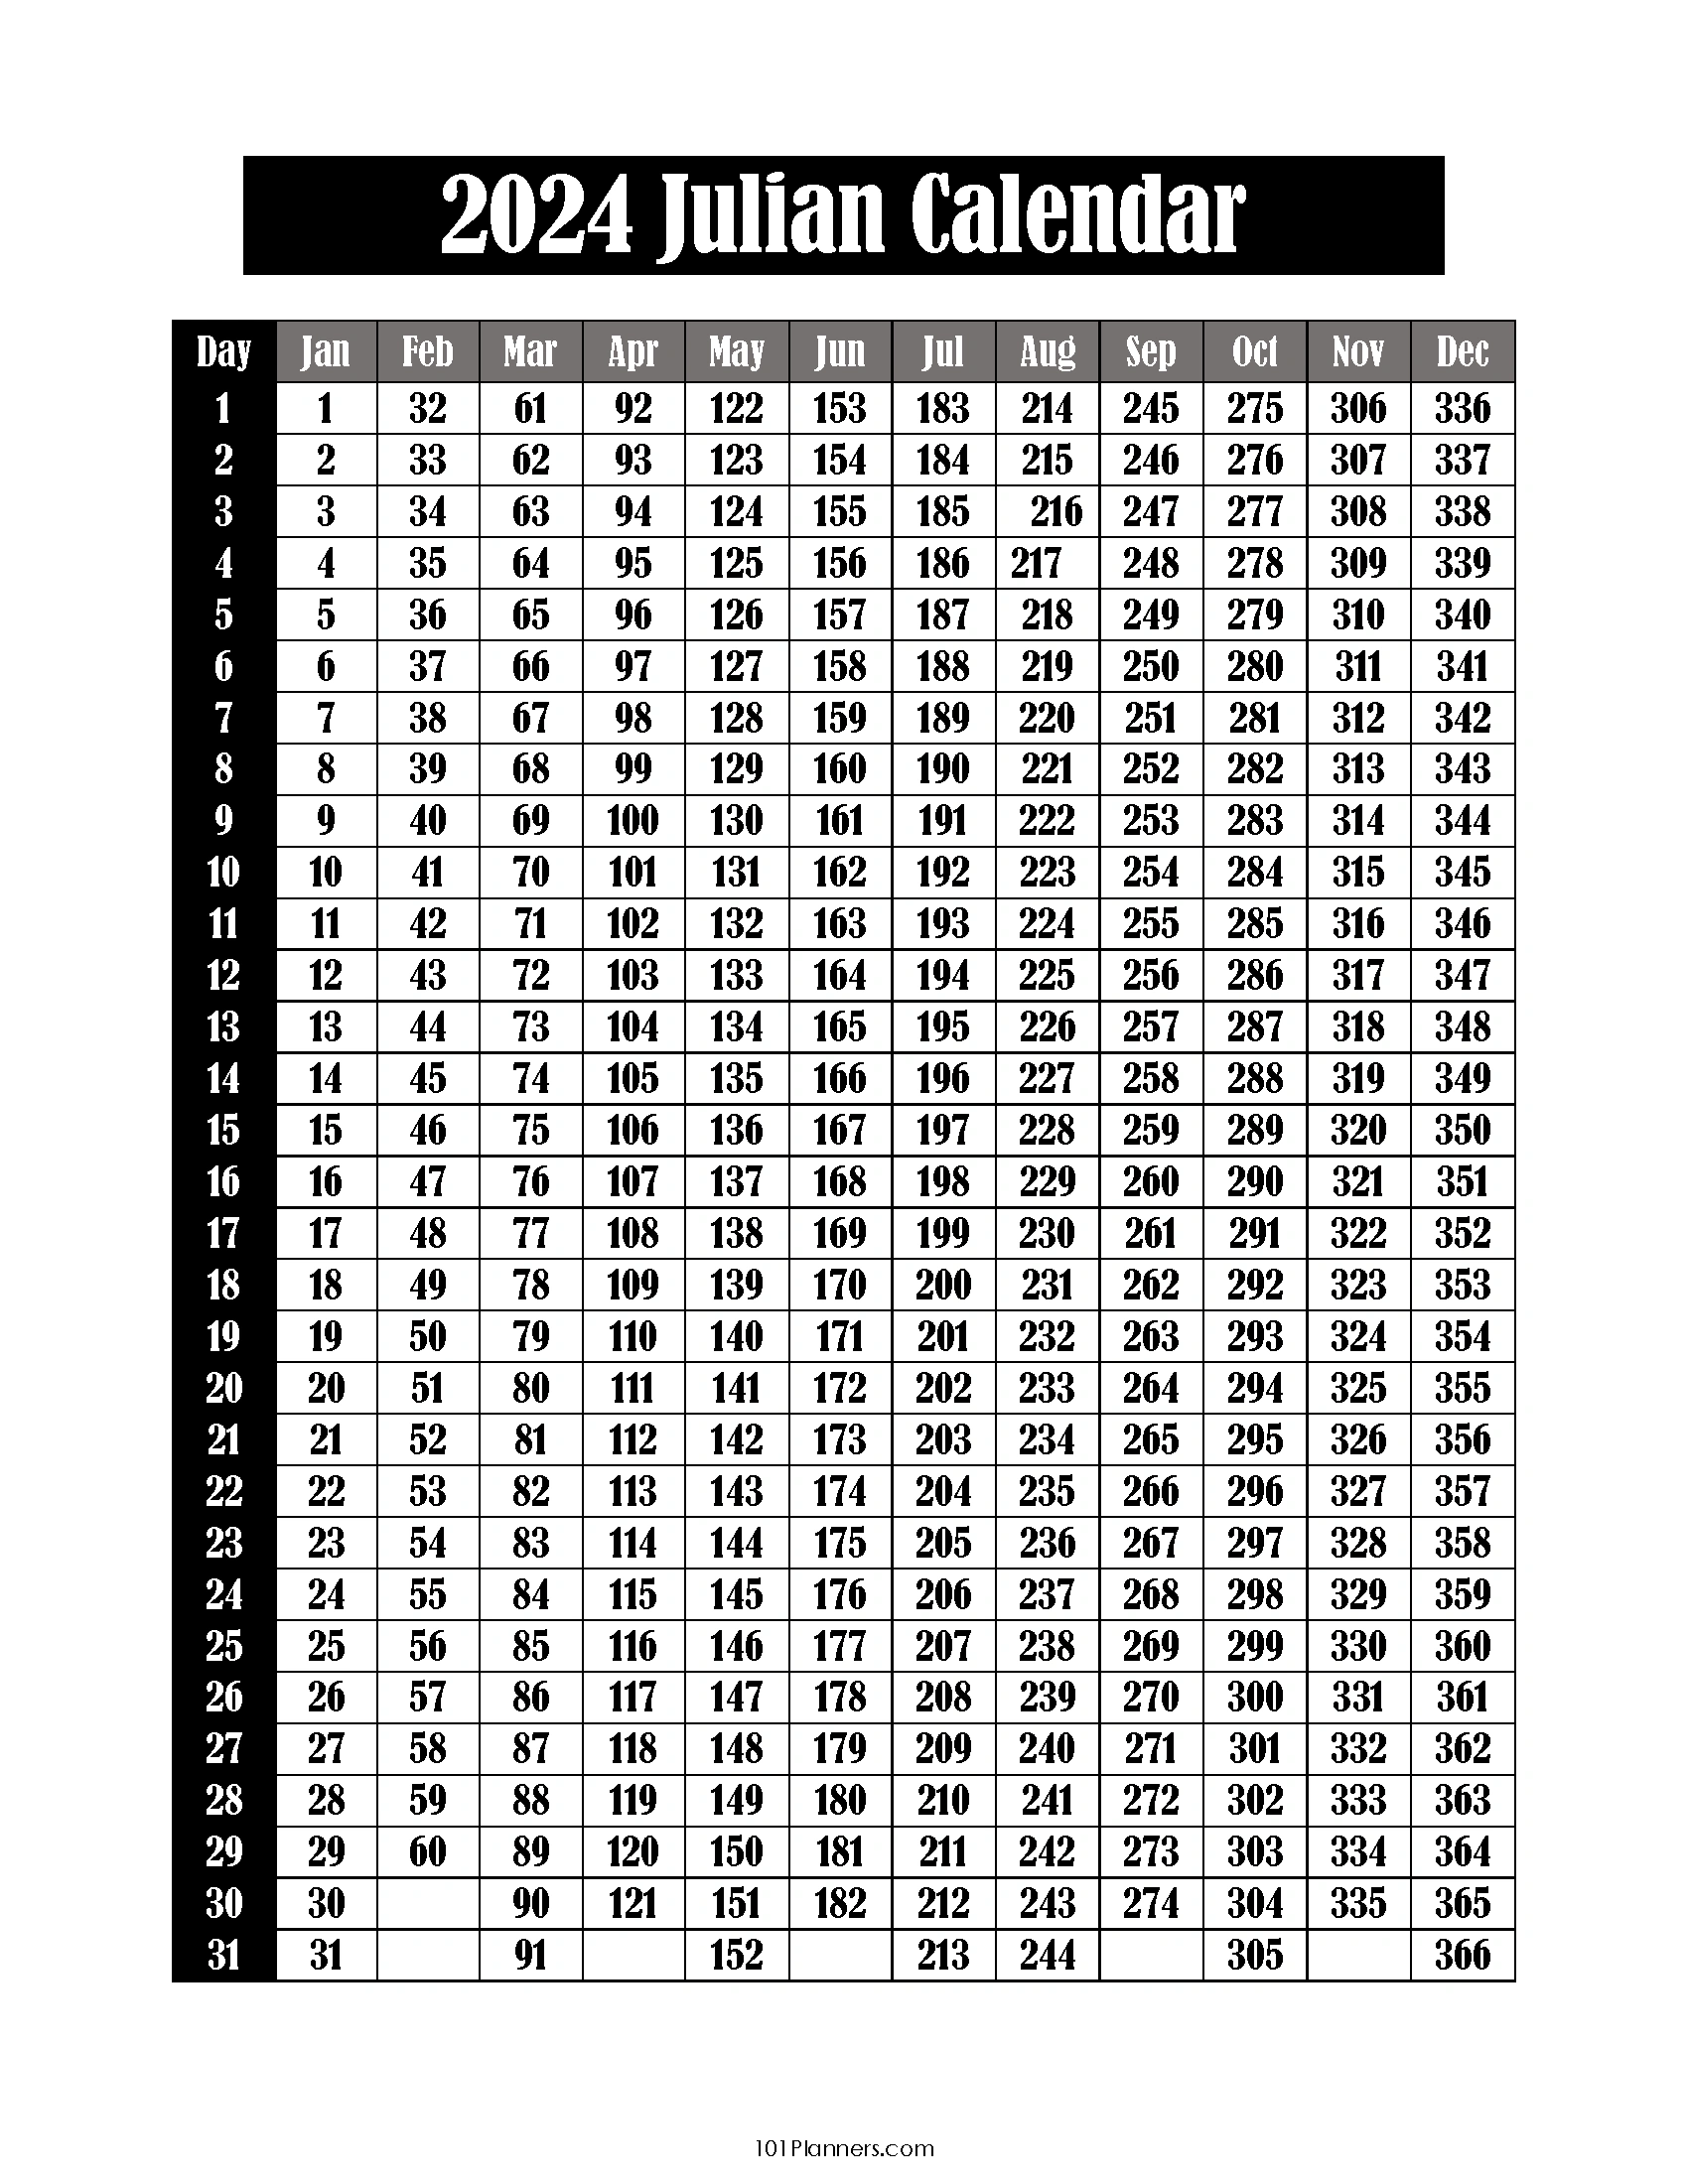 Free Printable Julian Calendar 2024-2032 | Julian Date Today pertaining to 2024 Julian Date Calendar Printable Free